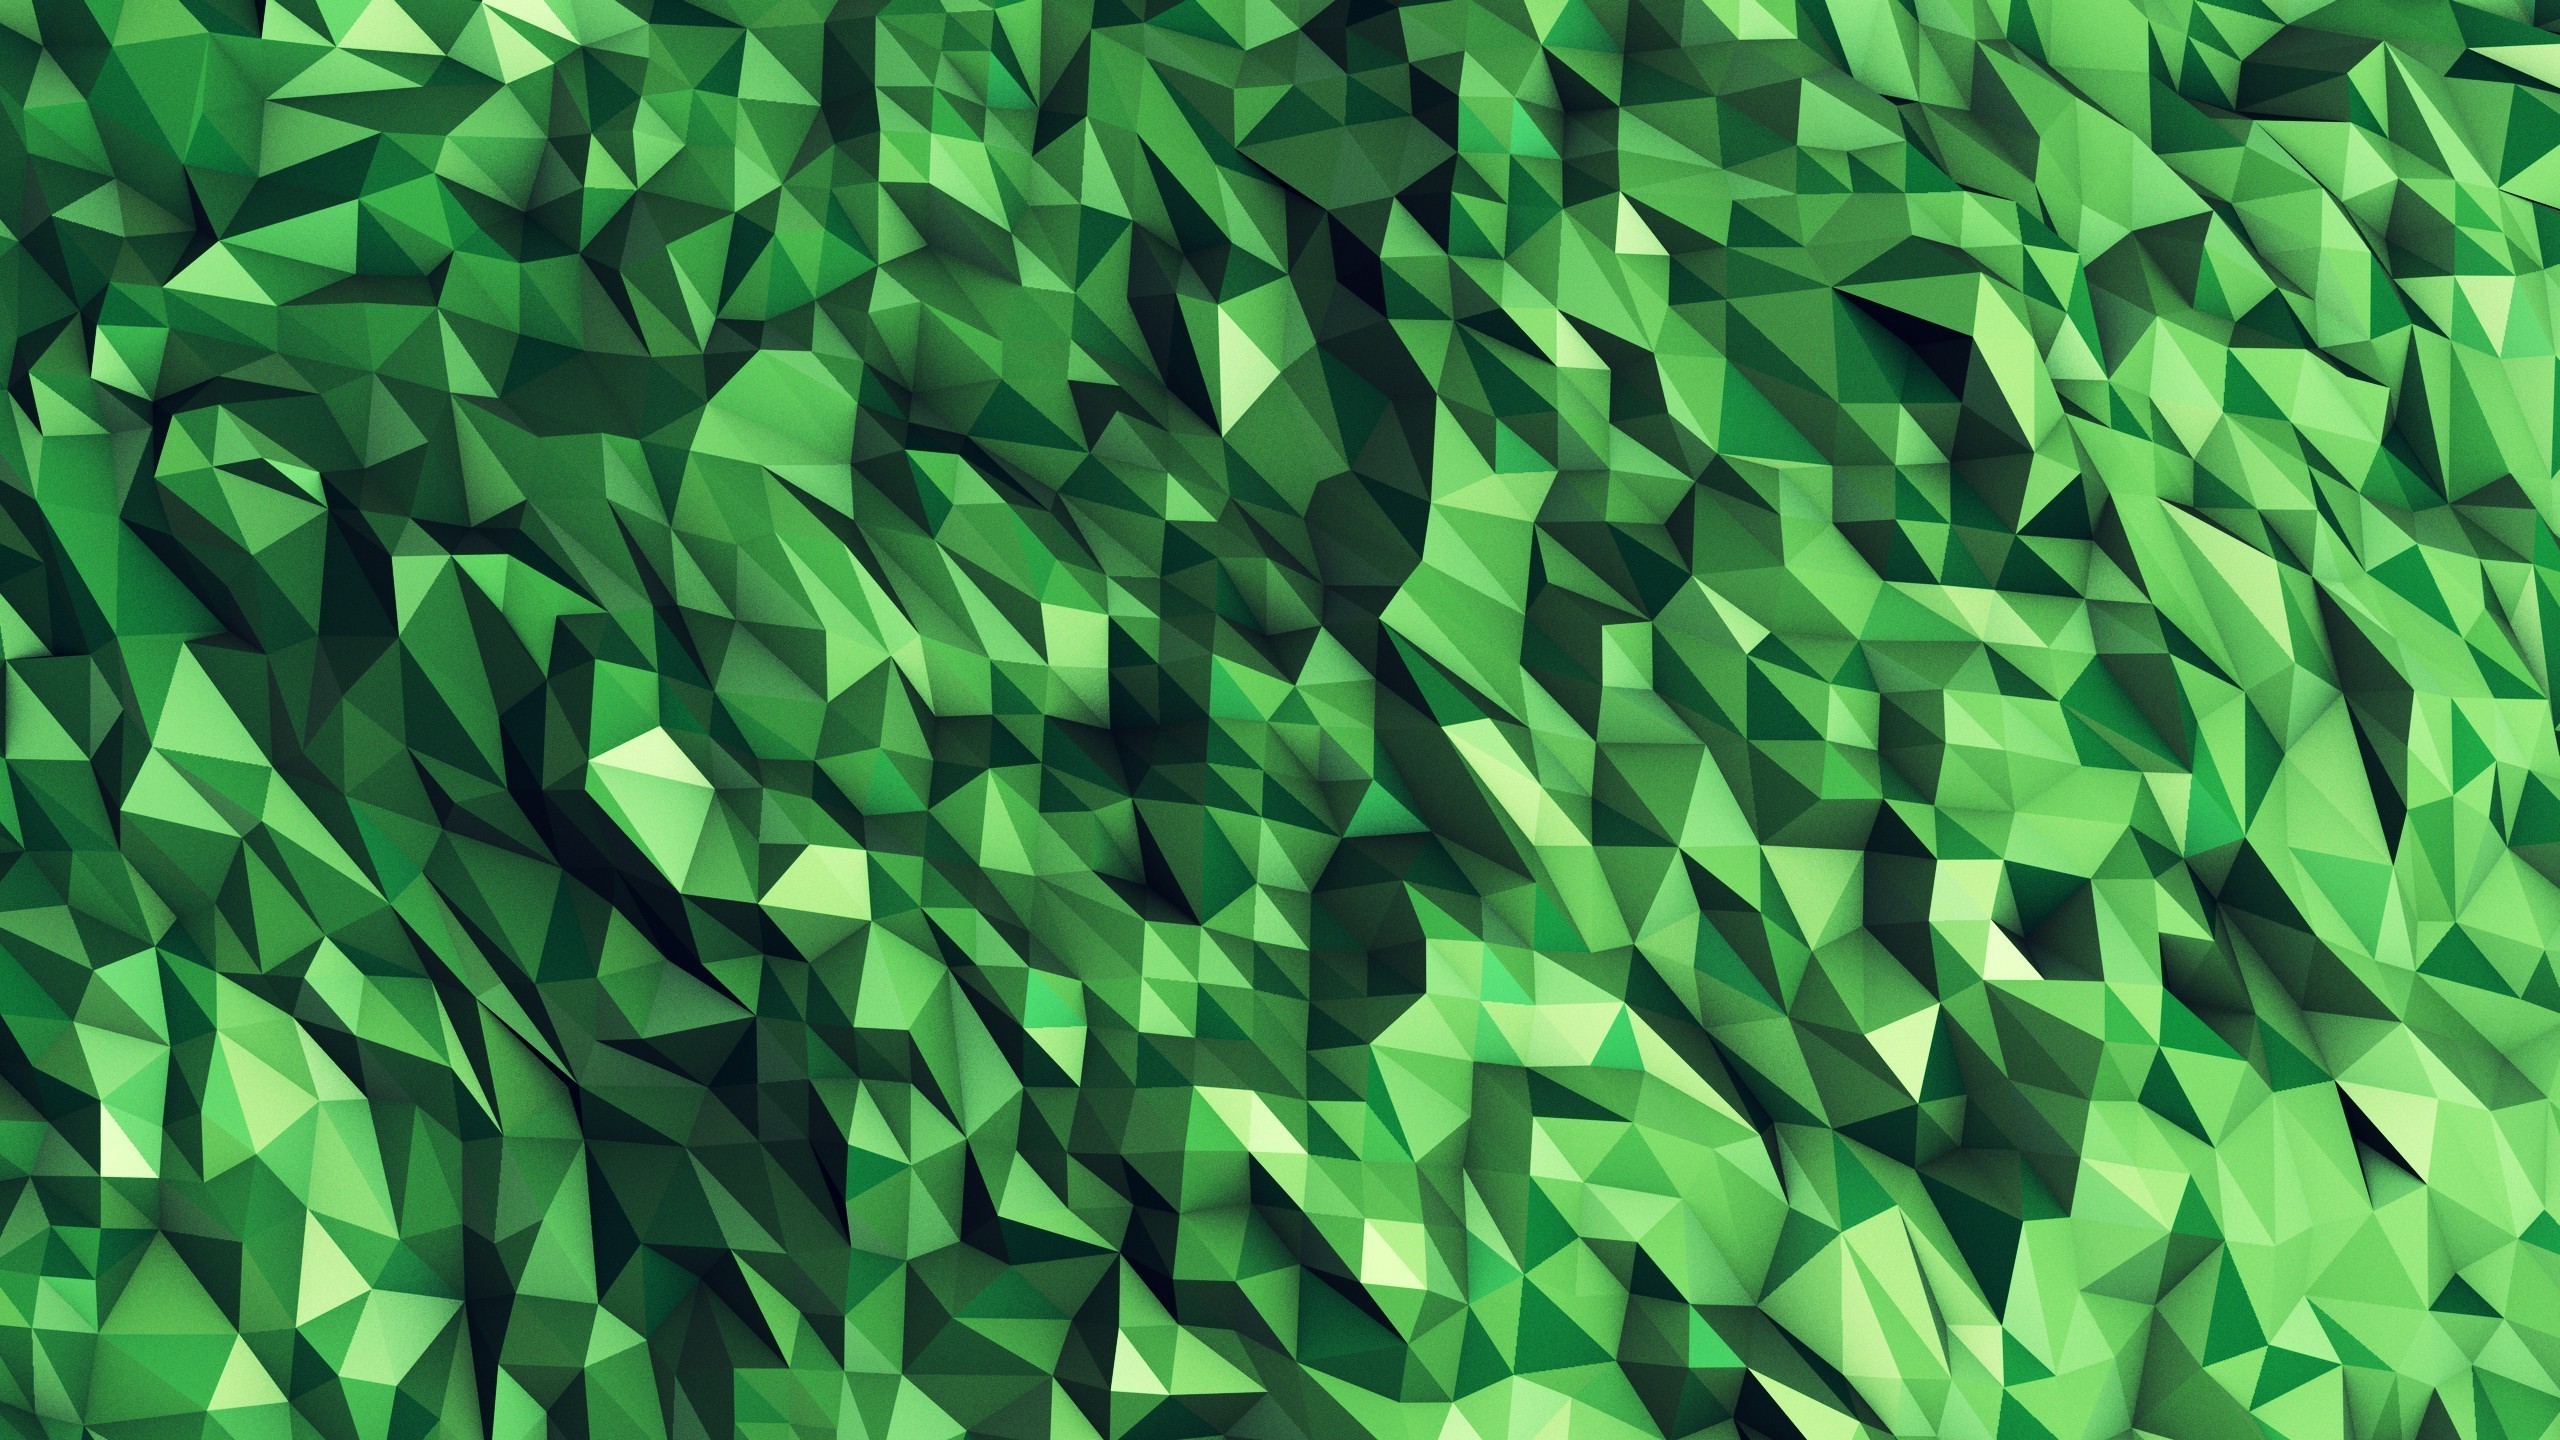 2560x1440 polygon-wallpaper-9.jpg (immagine JPEG, 2560 Ã 1440 pixel) - Riscalata  (50%) | Design | Pinterest | Wallpaper